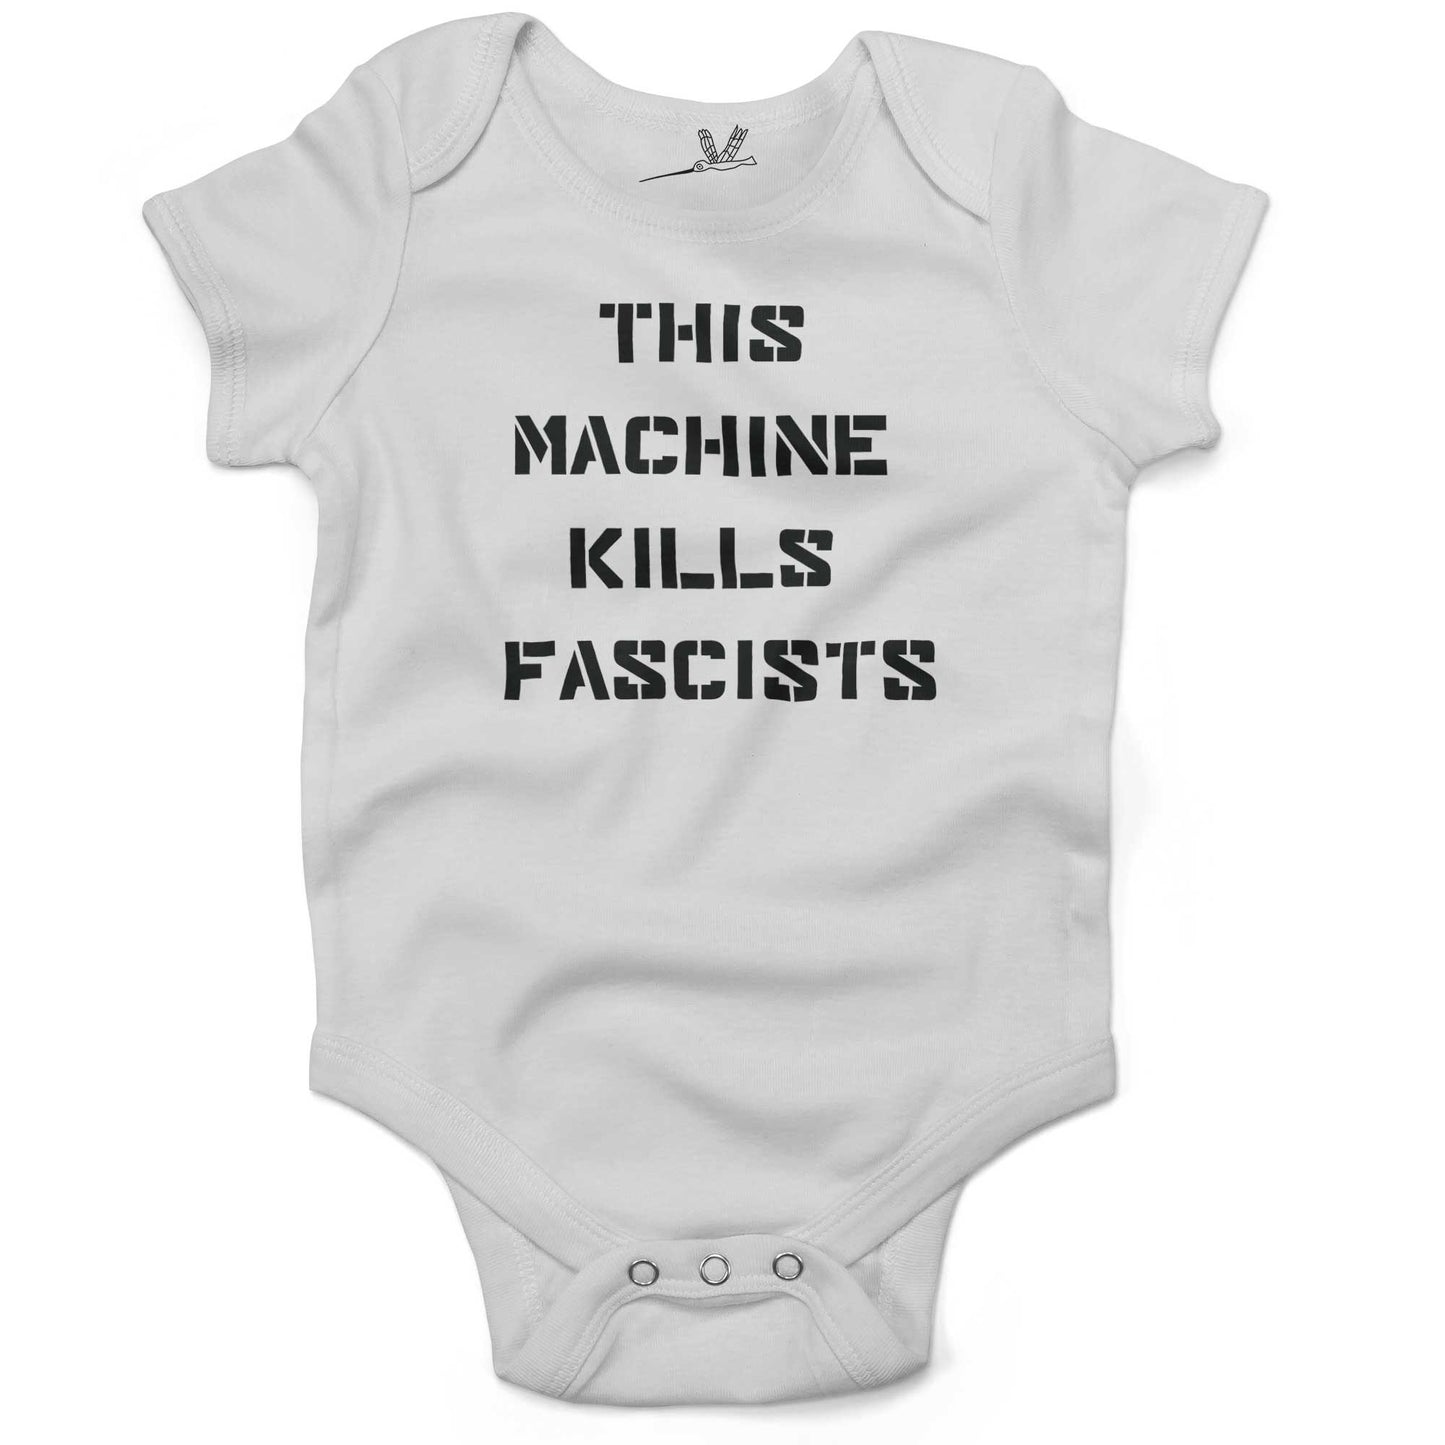 This Machine Kills Fascists Baby One Piece or Raglan Tee-White-3-6 months